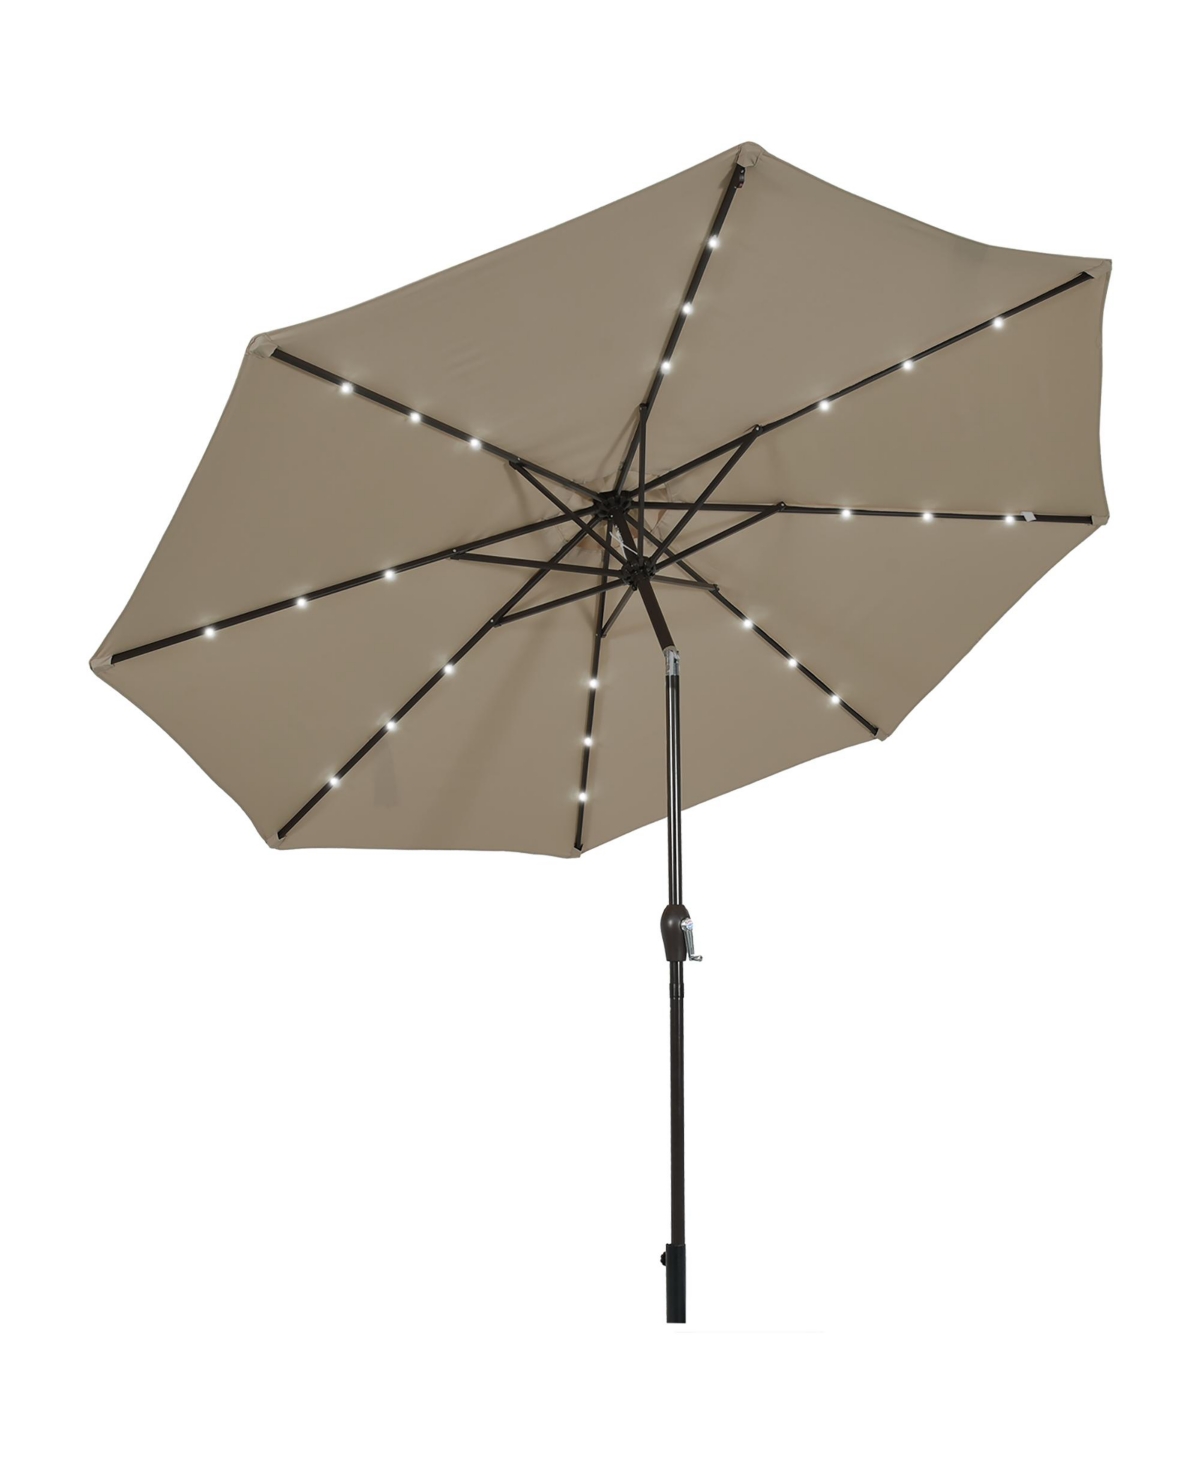 10' Solar Led Lighted Patio Market Umbrella Shade Tilt Adjustment - Brown